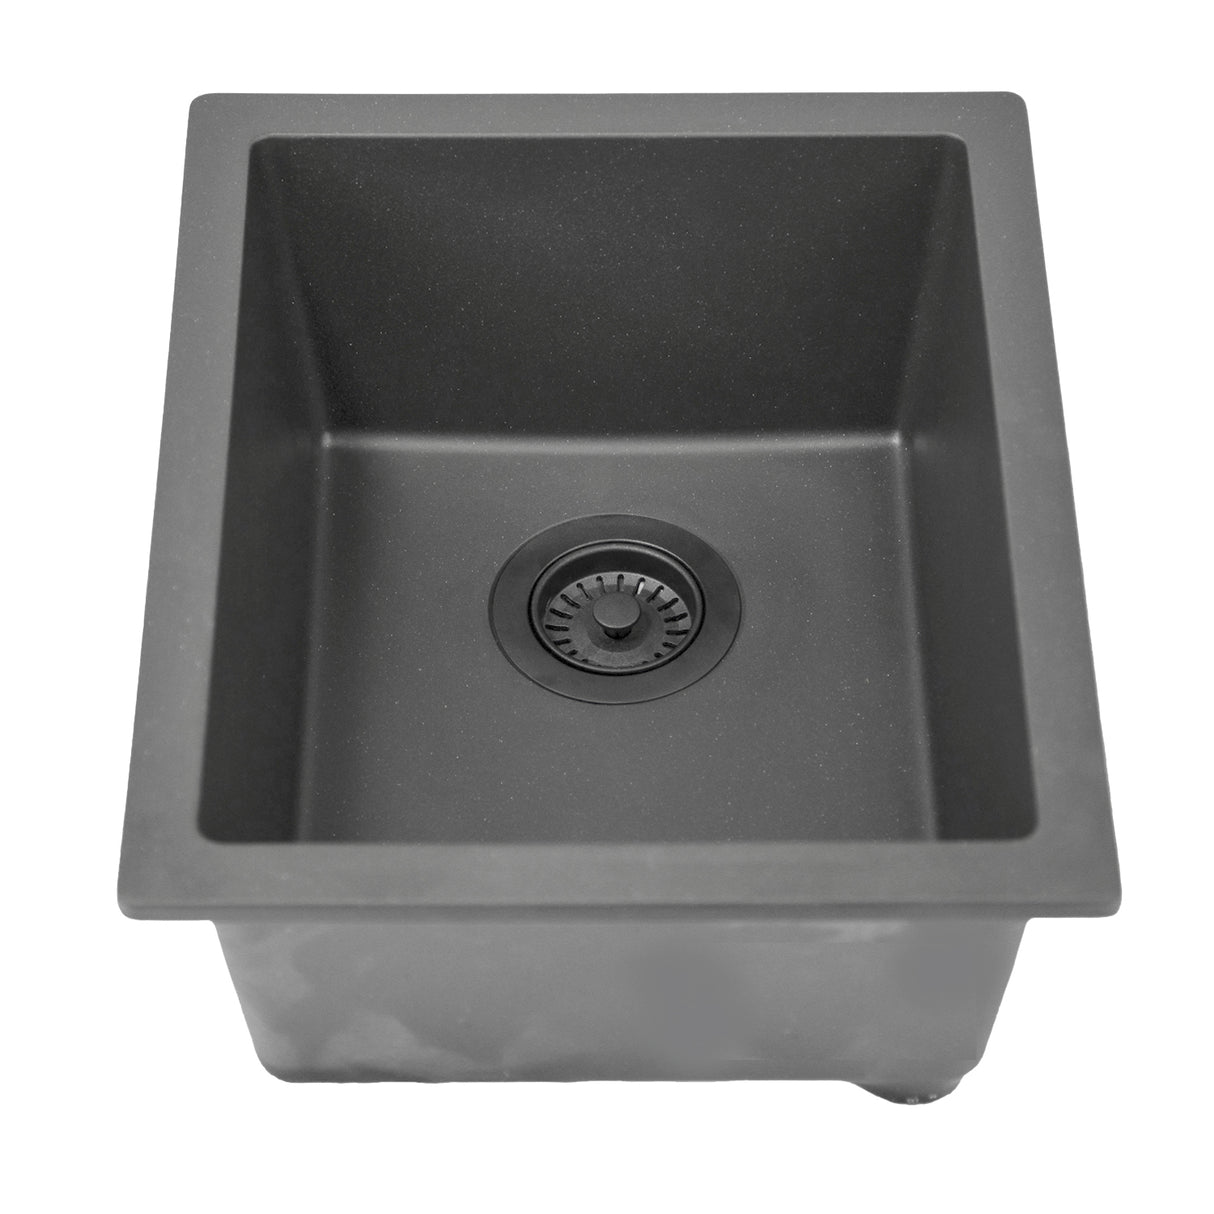 Nantucket Sinks Single Bowl Dual-mount Granite Composite Bar-Prep Sink Titanium